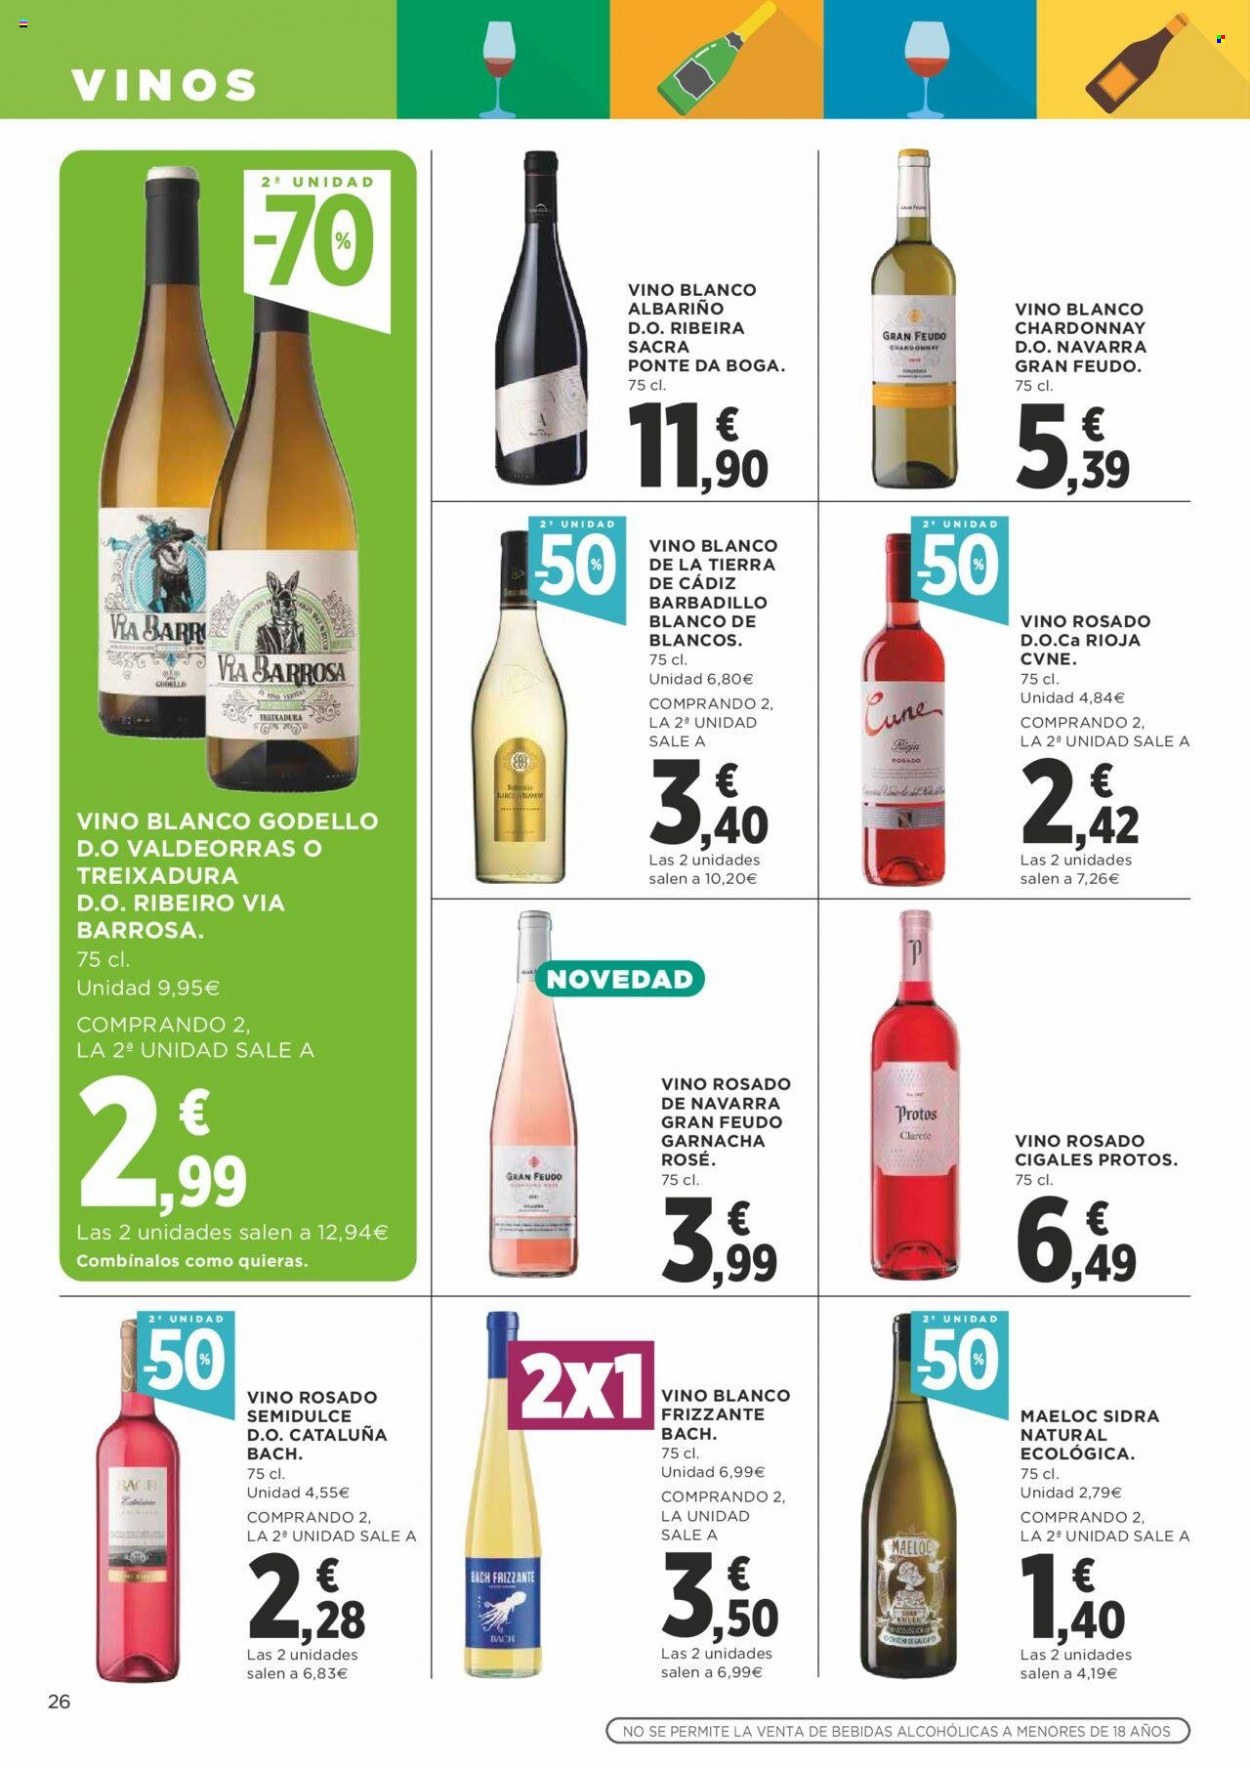 thumbnail - Folleto actual Supercor supermercados - 30/06/22 - 13/07/22 - Ventas - vino, Chardonnay, vino blanco, Rioja, vino rosado, sidra. Página 26.